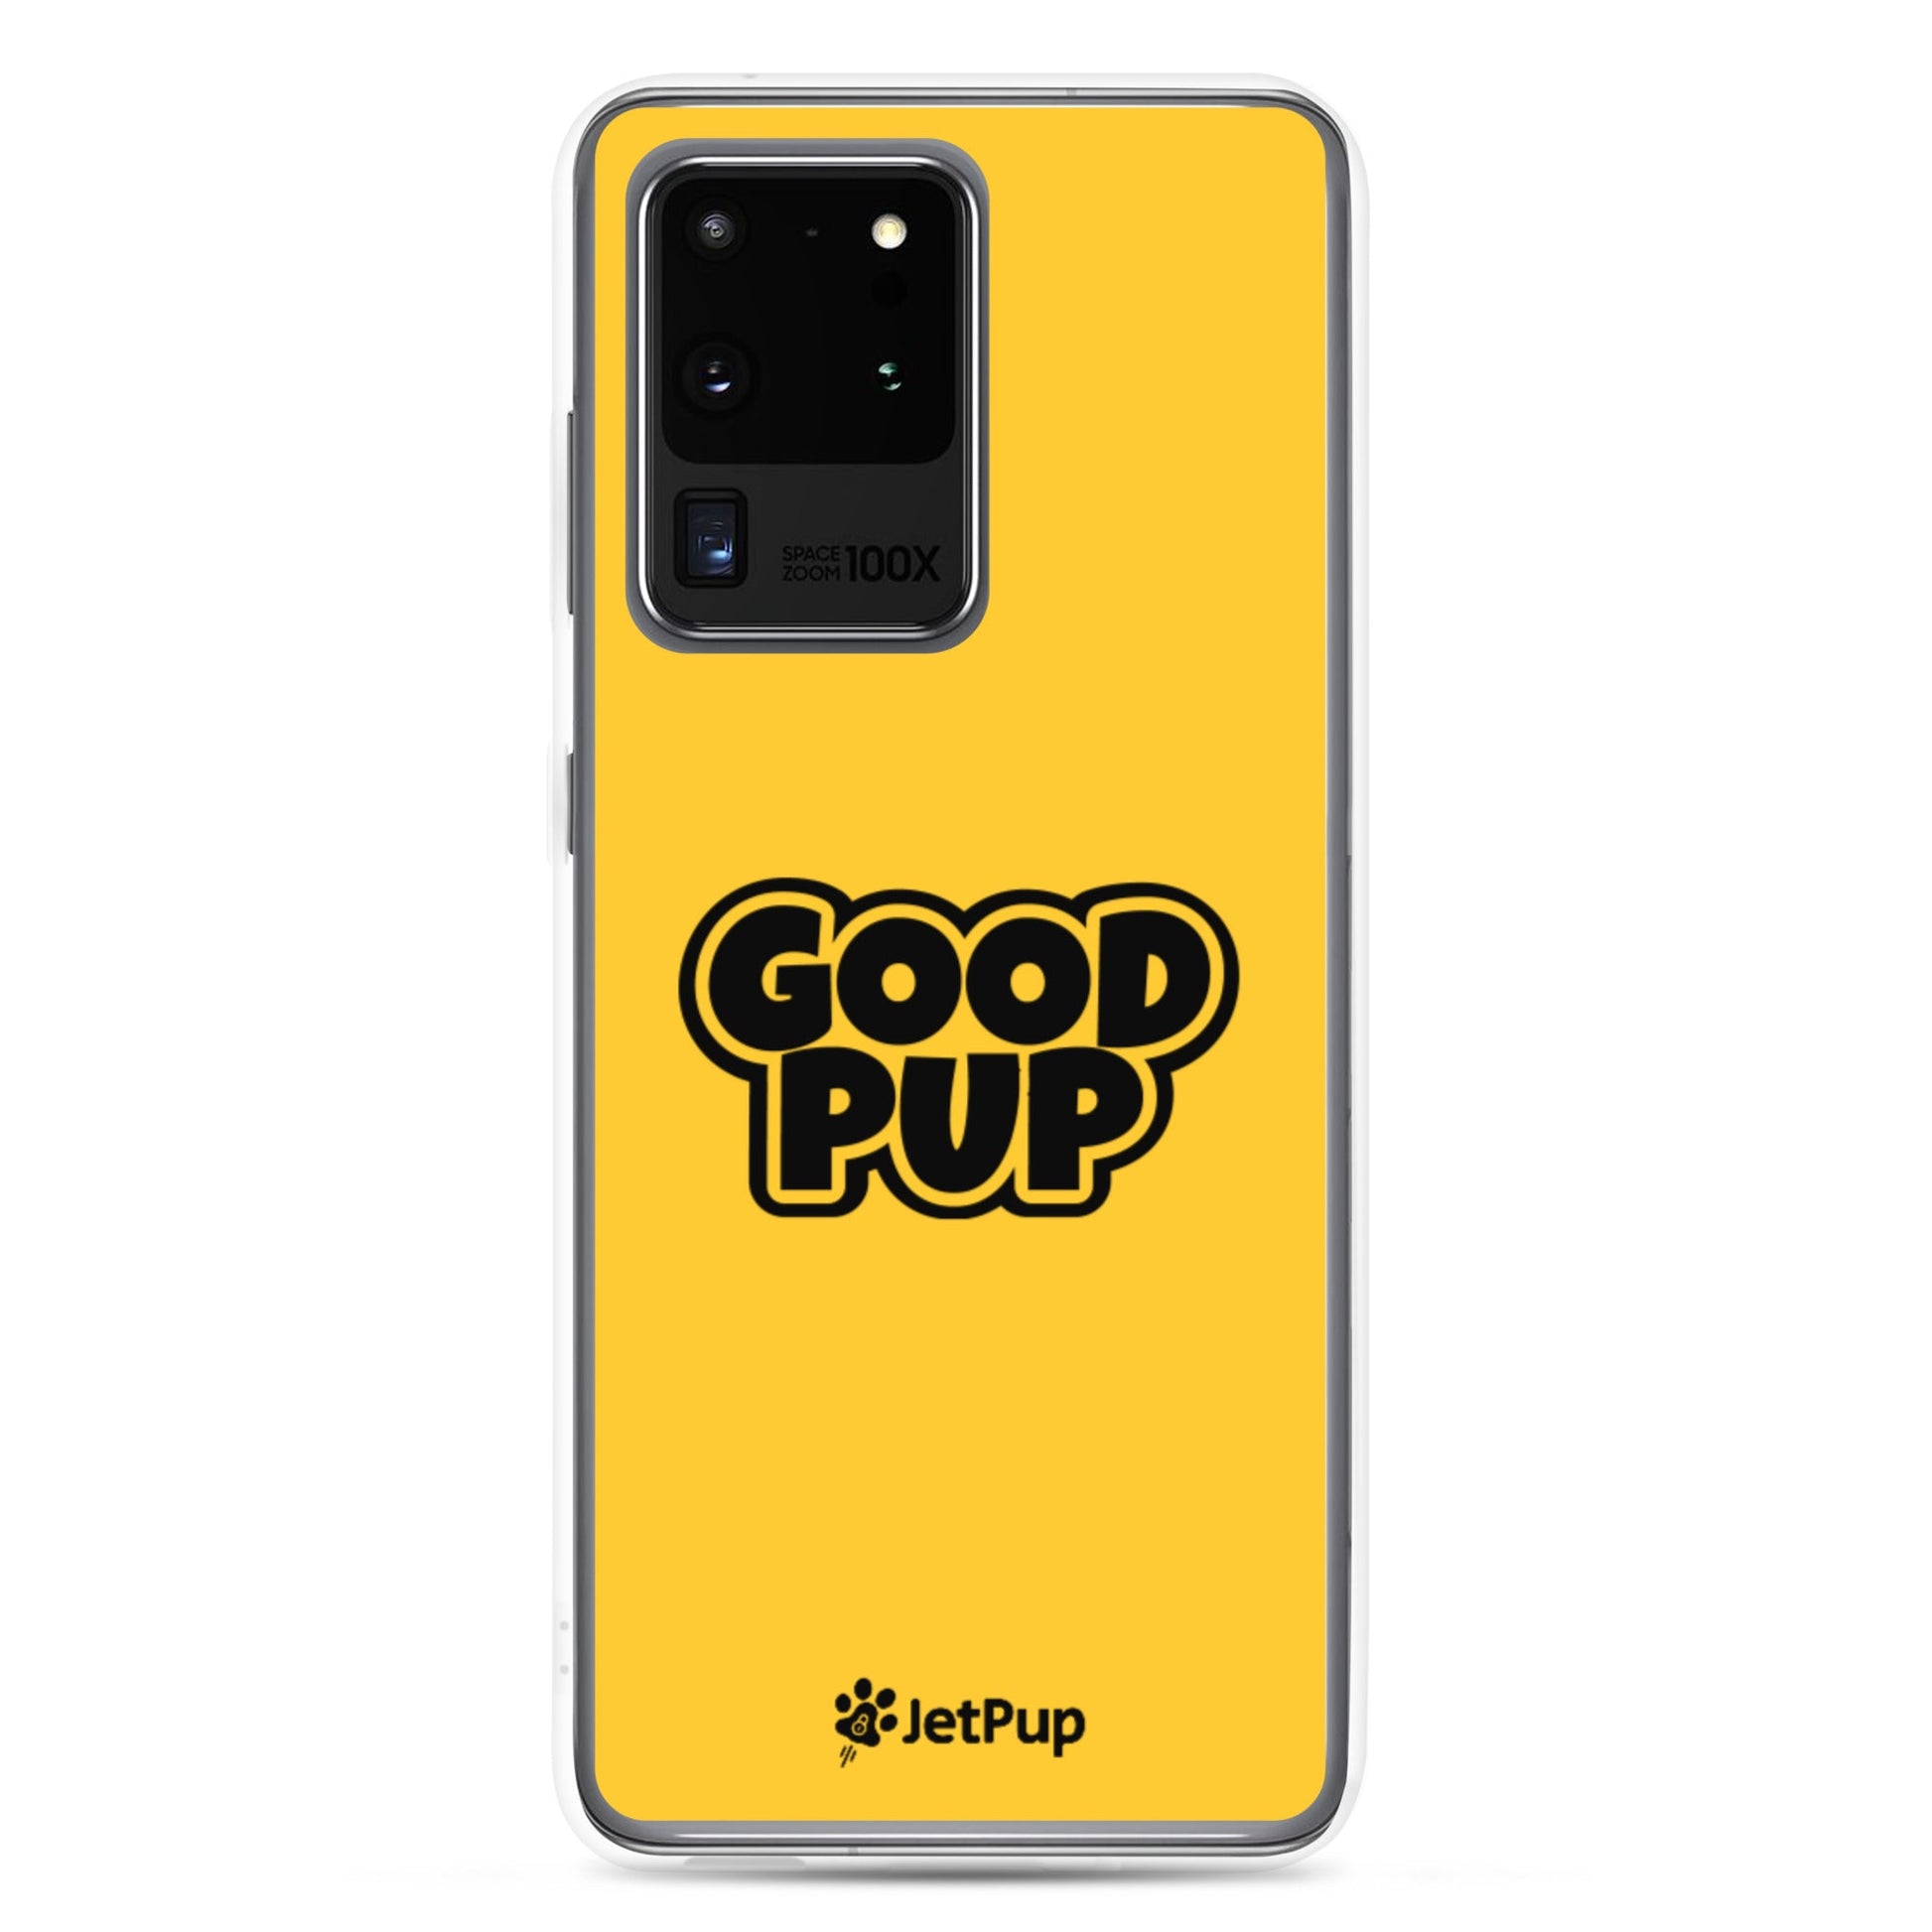 Good Pup Samsung Case - Yellow - JetPup